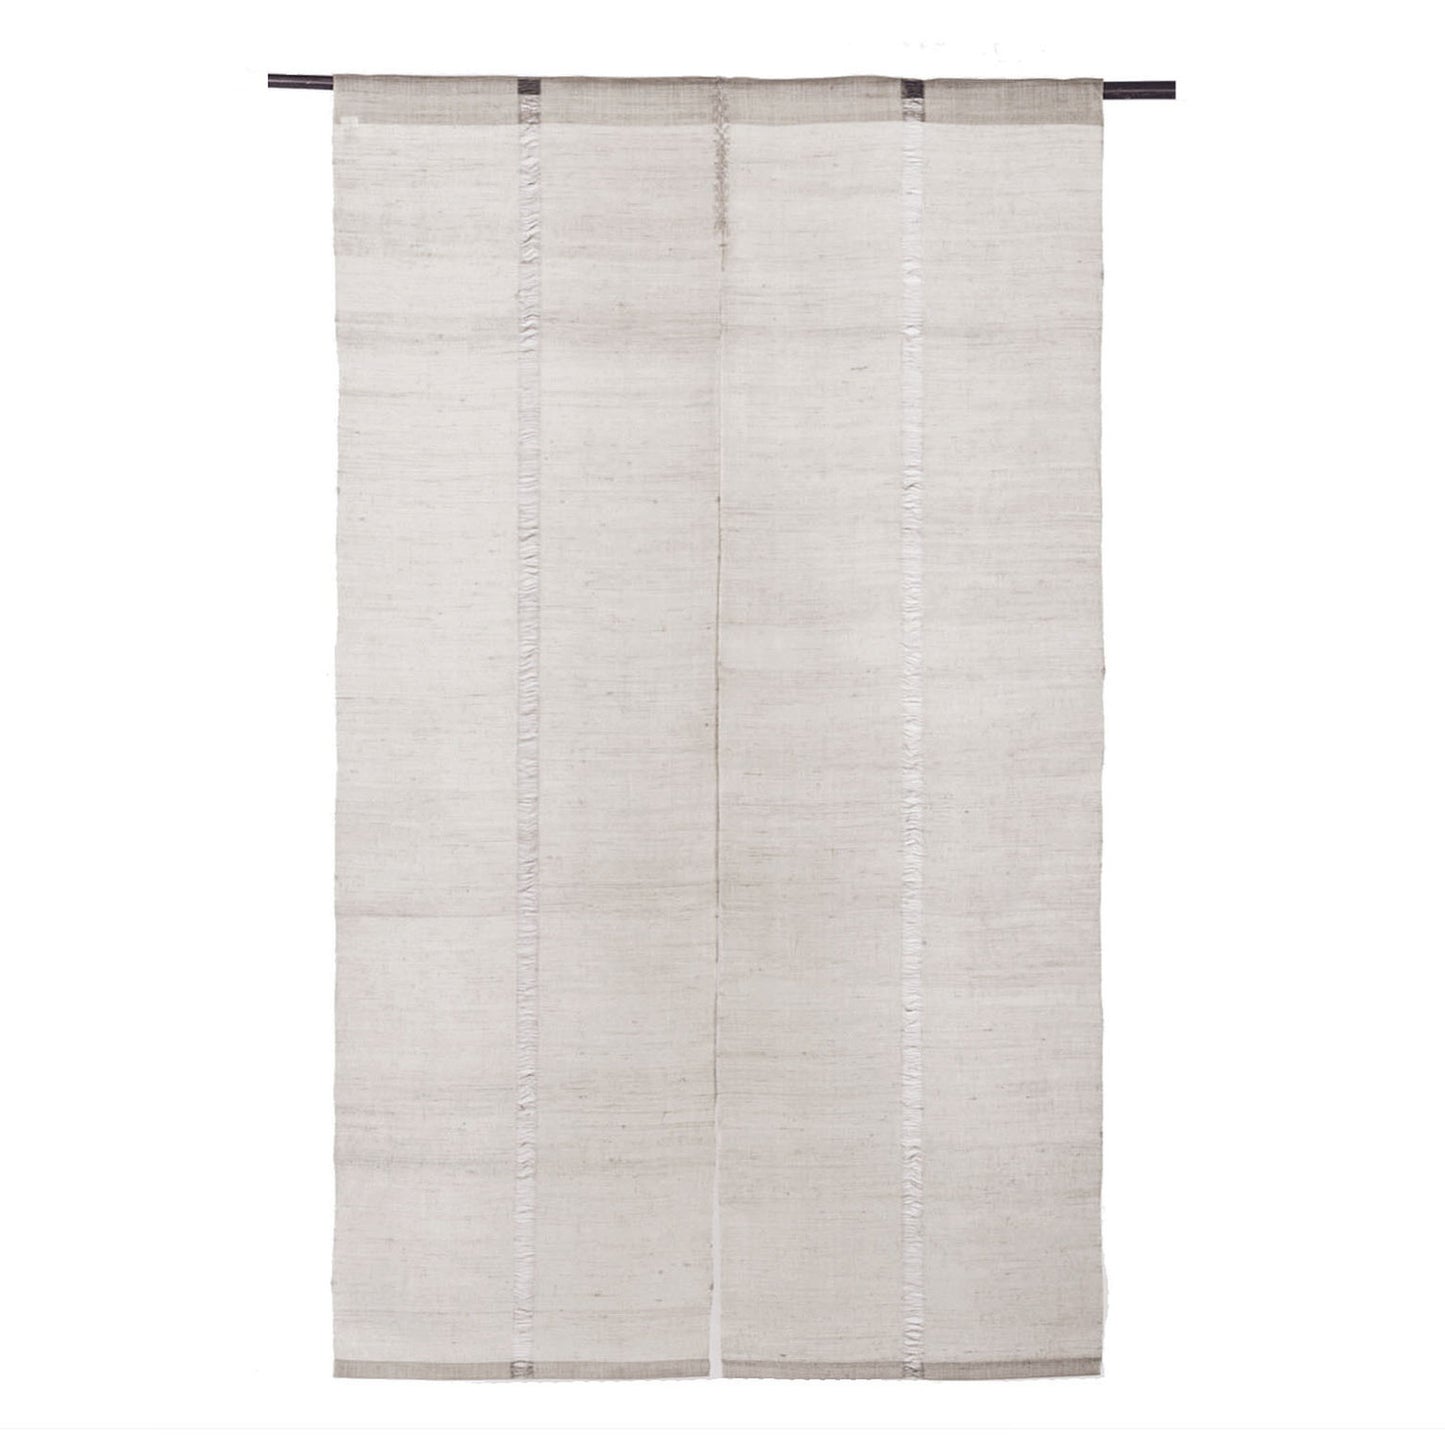 Japanese Curtain (Noren) / Ramie / IONO-Woven / Plain White / W90xH150cm